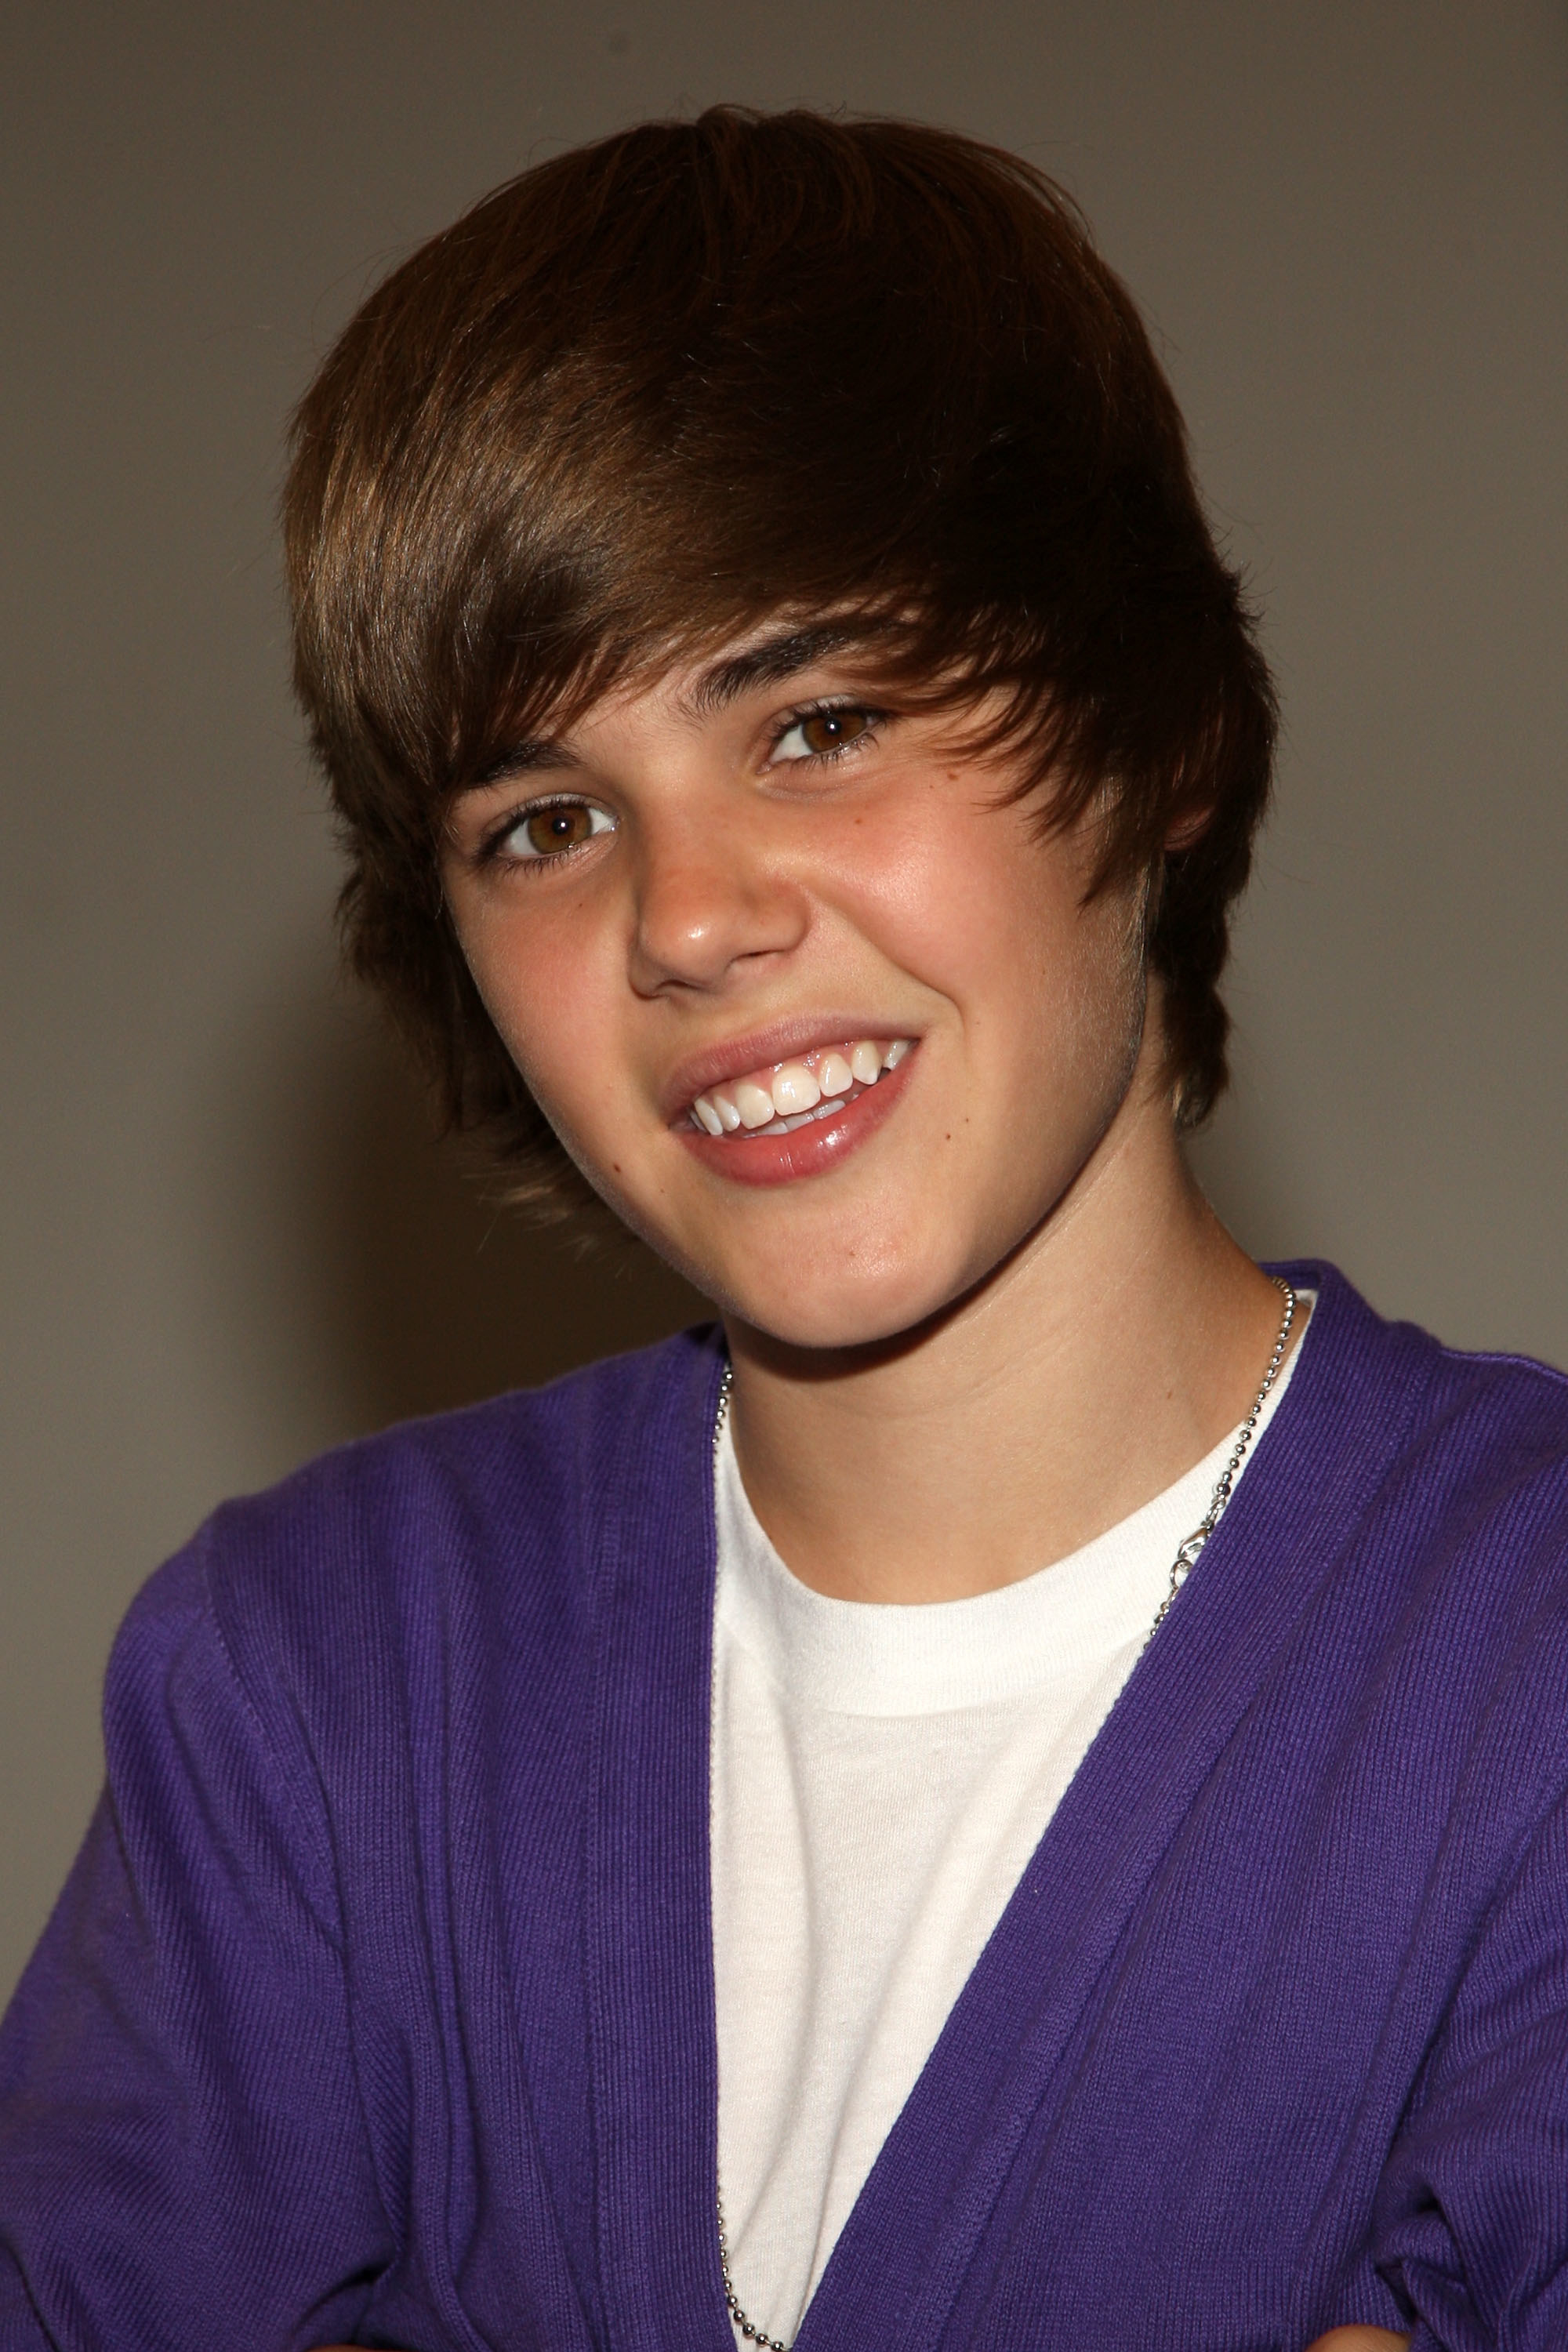 43 Top Images Justin Bieber Hair Black : Justin Bieber Cool Hairstyles ...